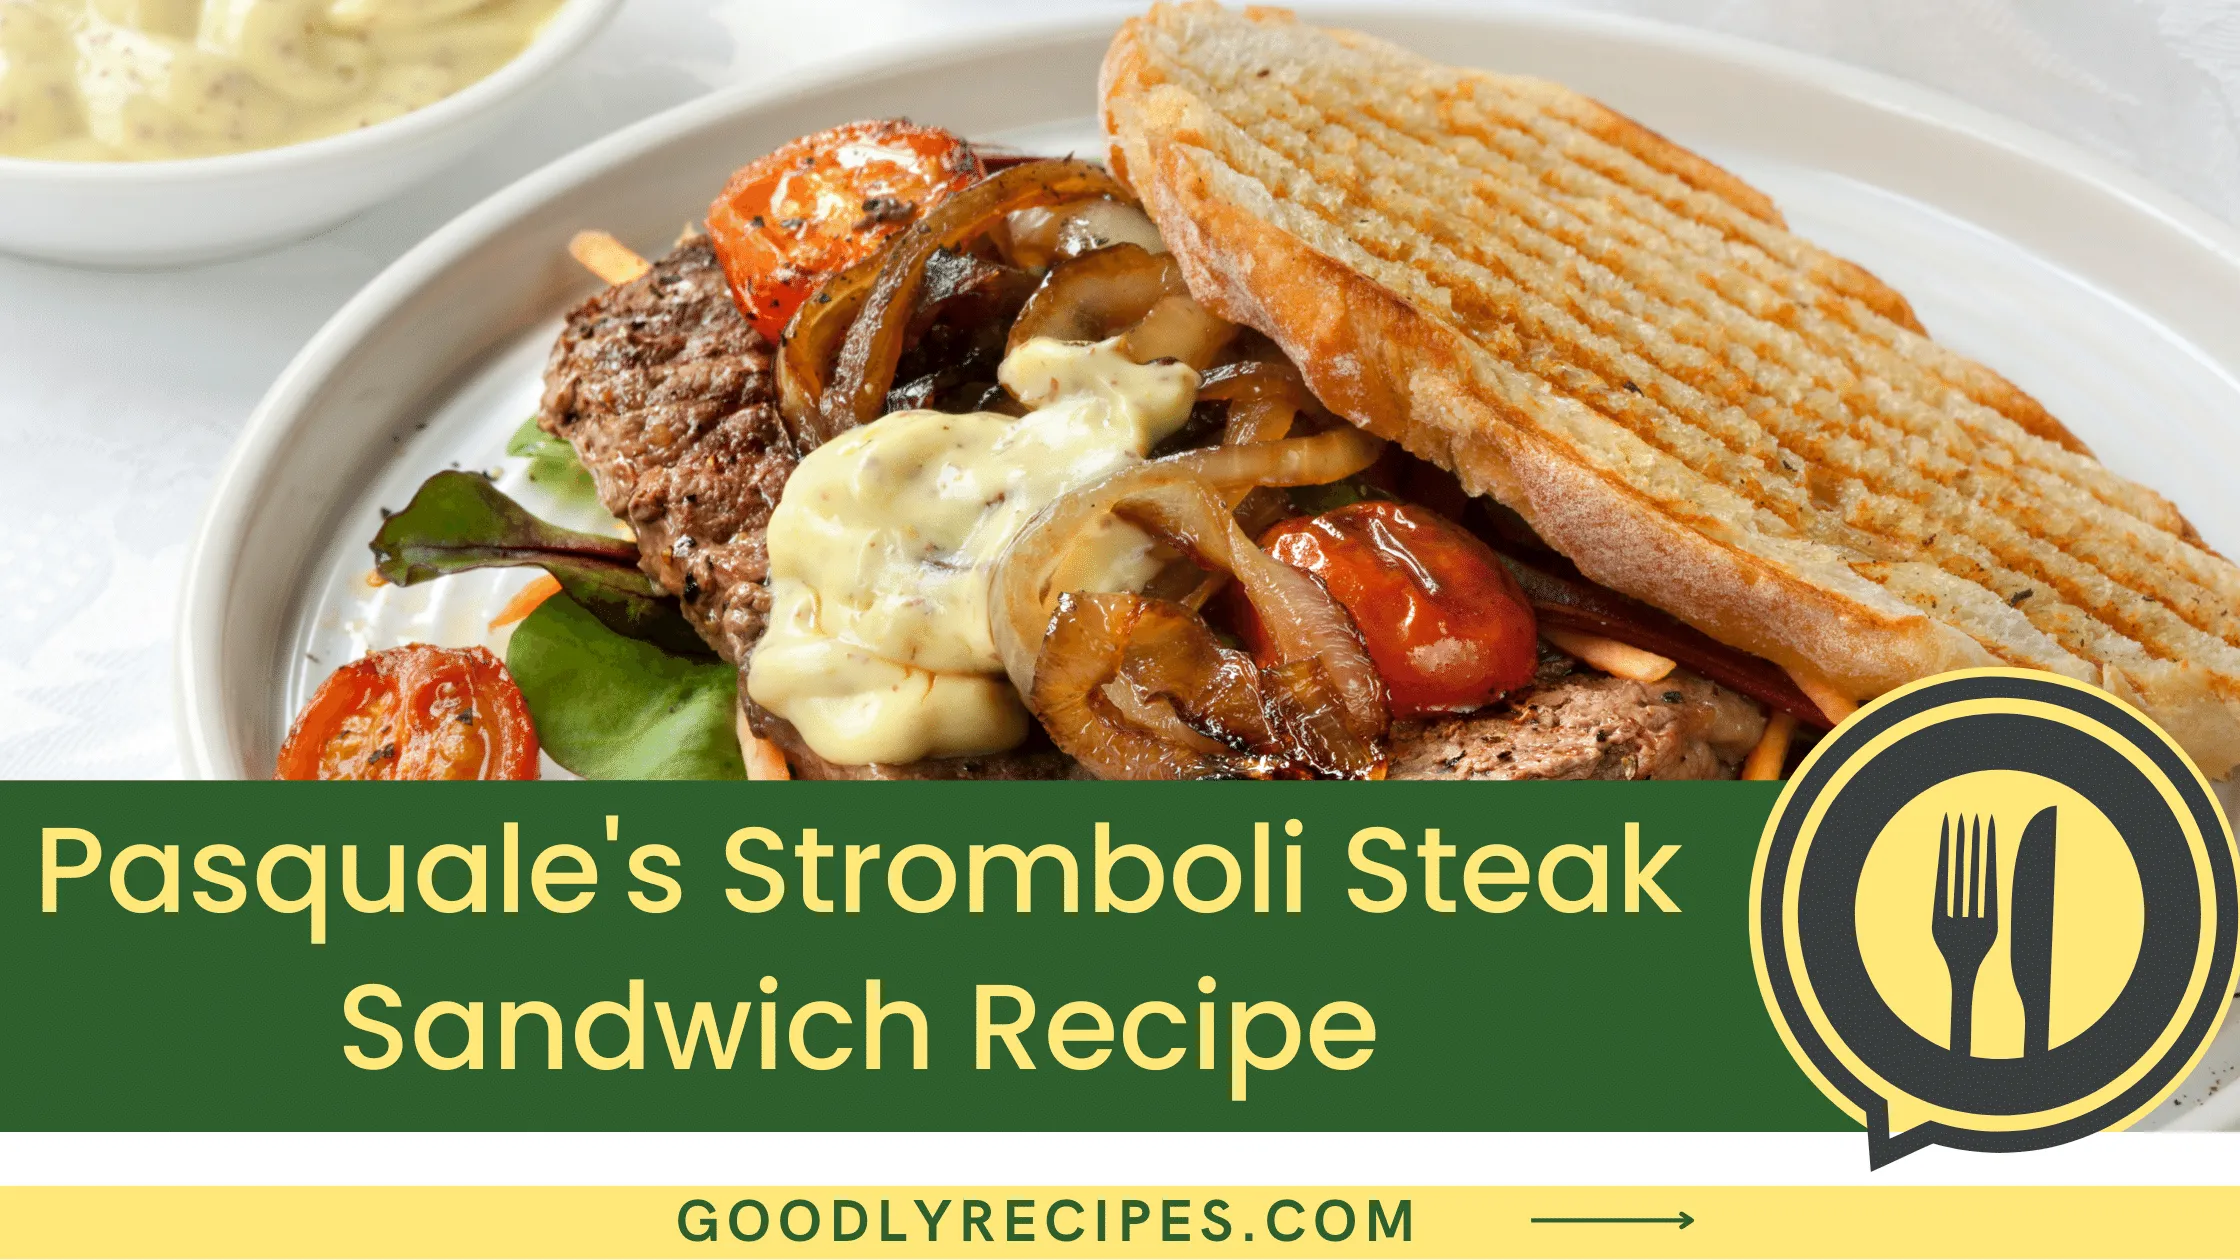 Pasquale's Stromboli Steak Sandwich Recipe